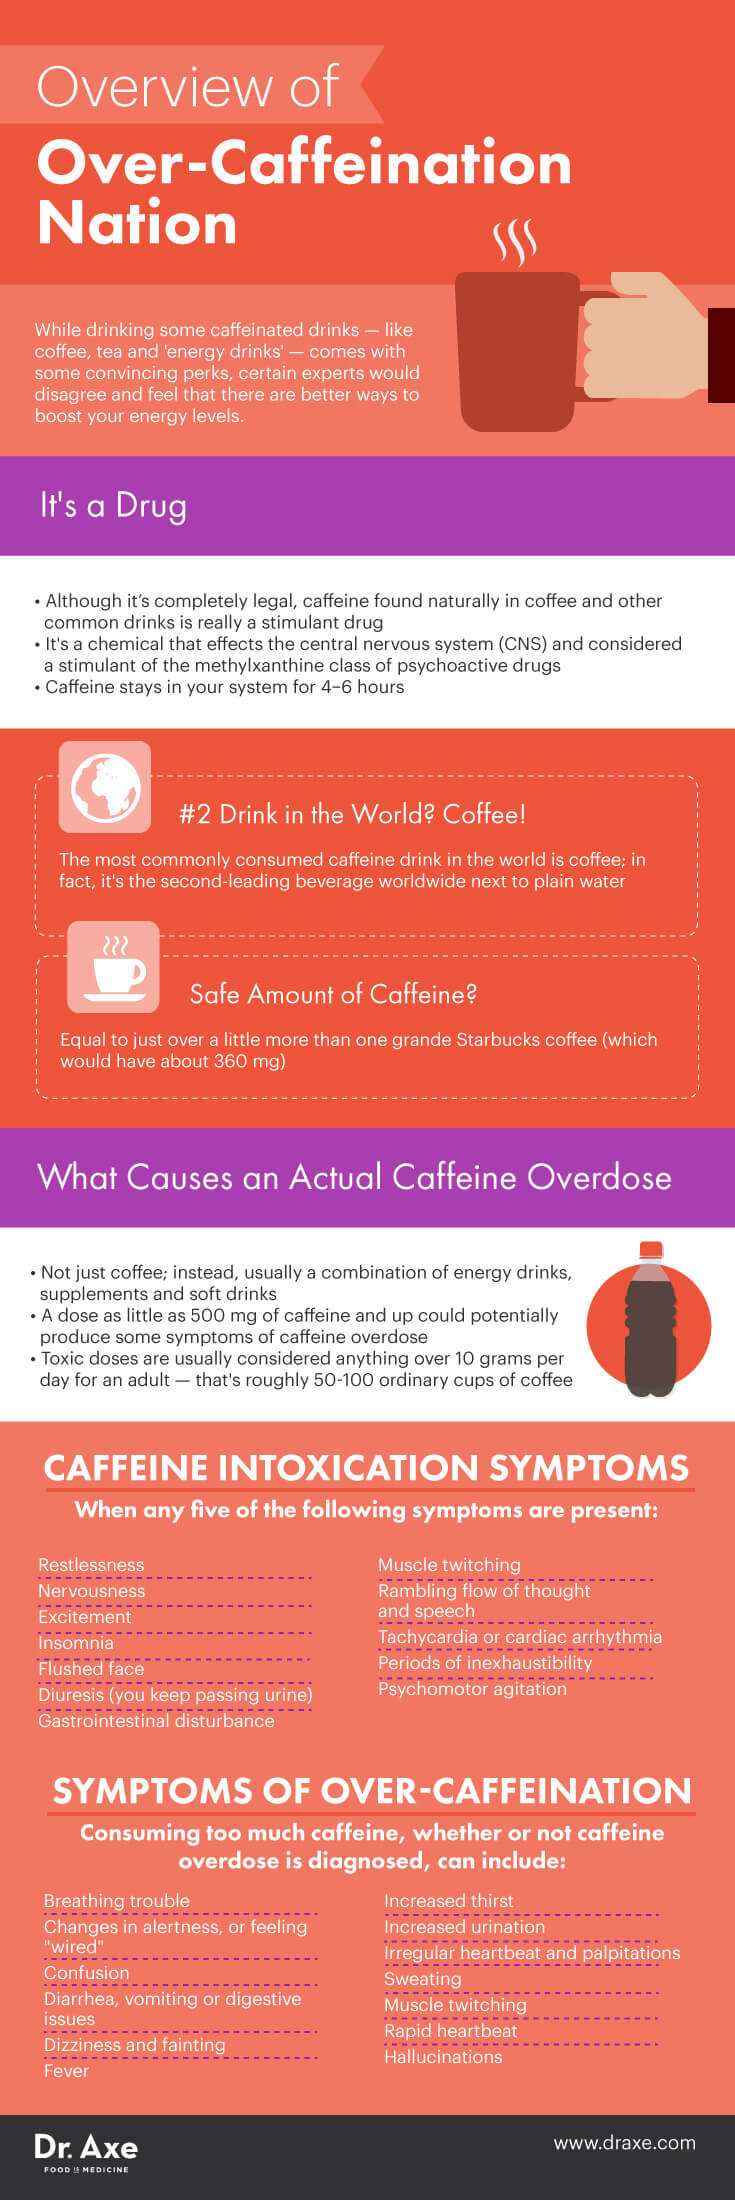 caffeine overdose side effects